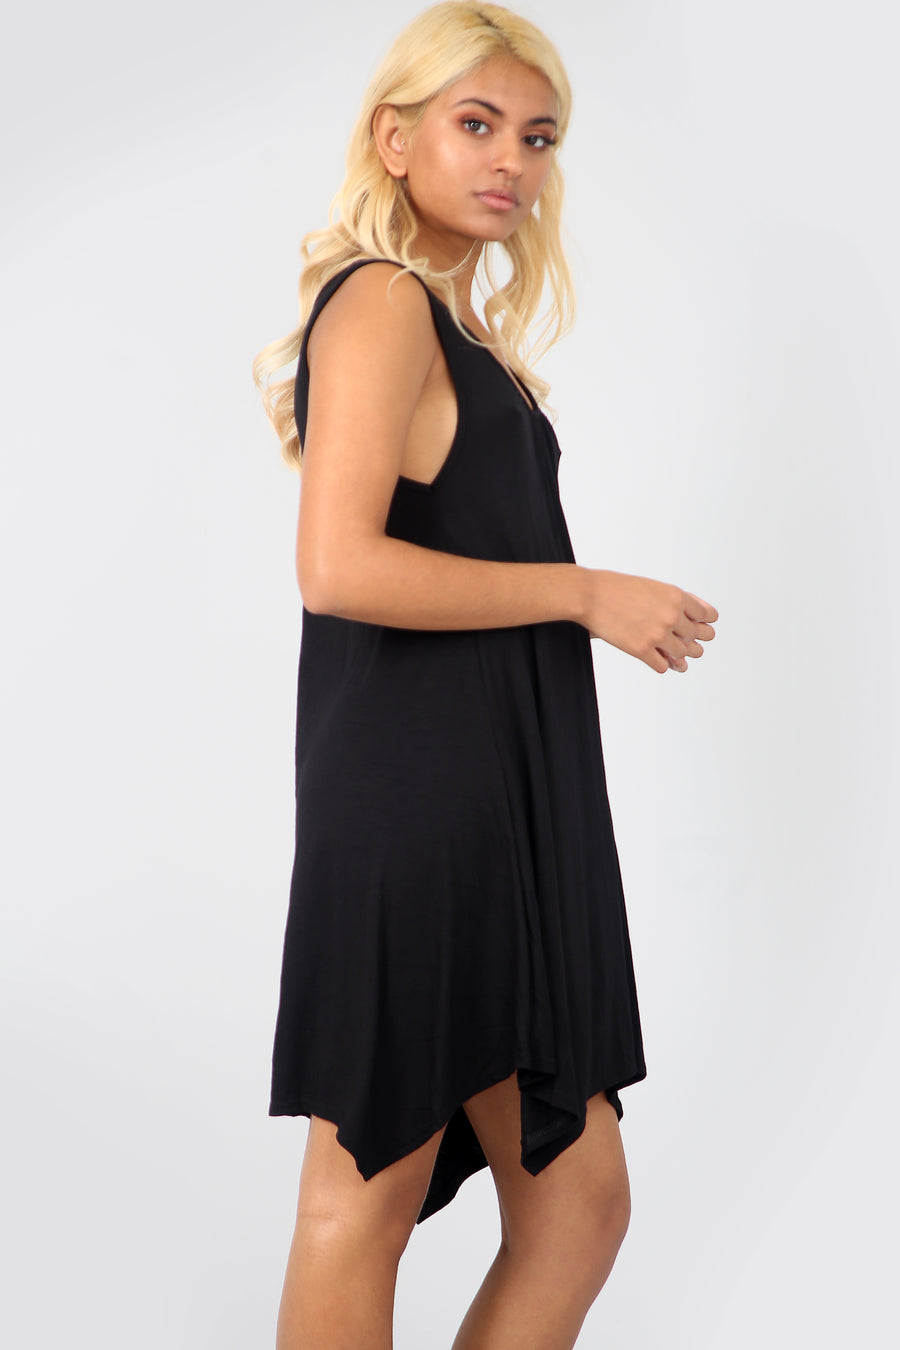 Sleeveless Hanky Hem Black Basic Mini Dress - bejealous-com